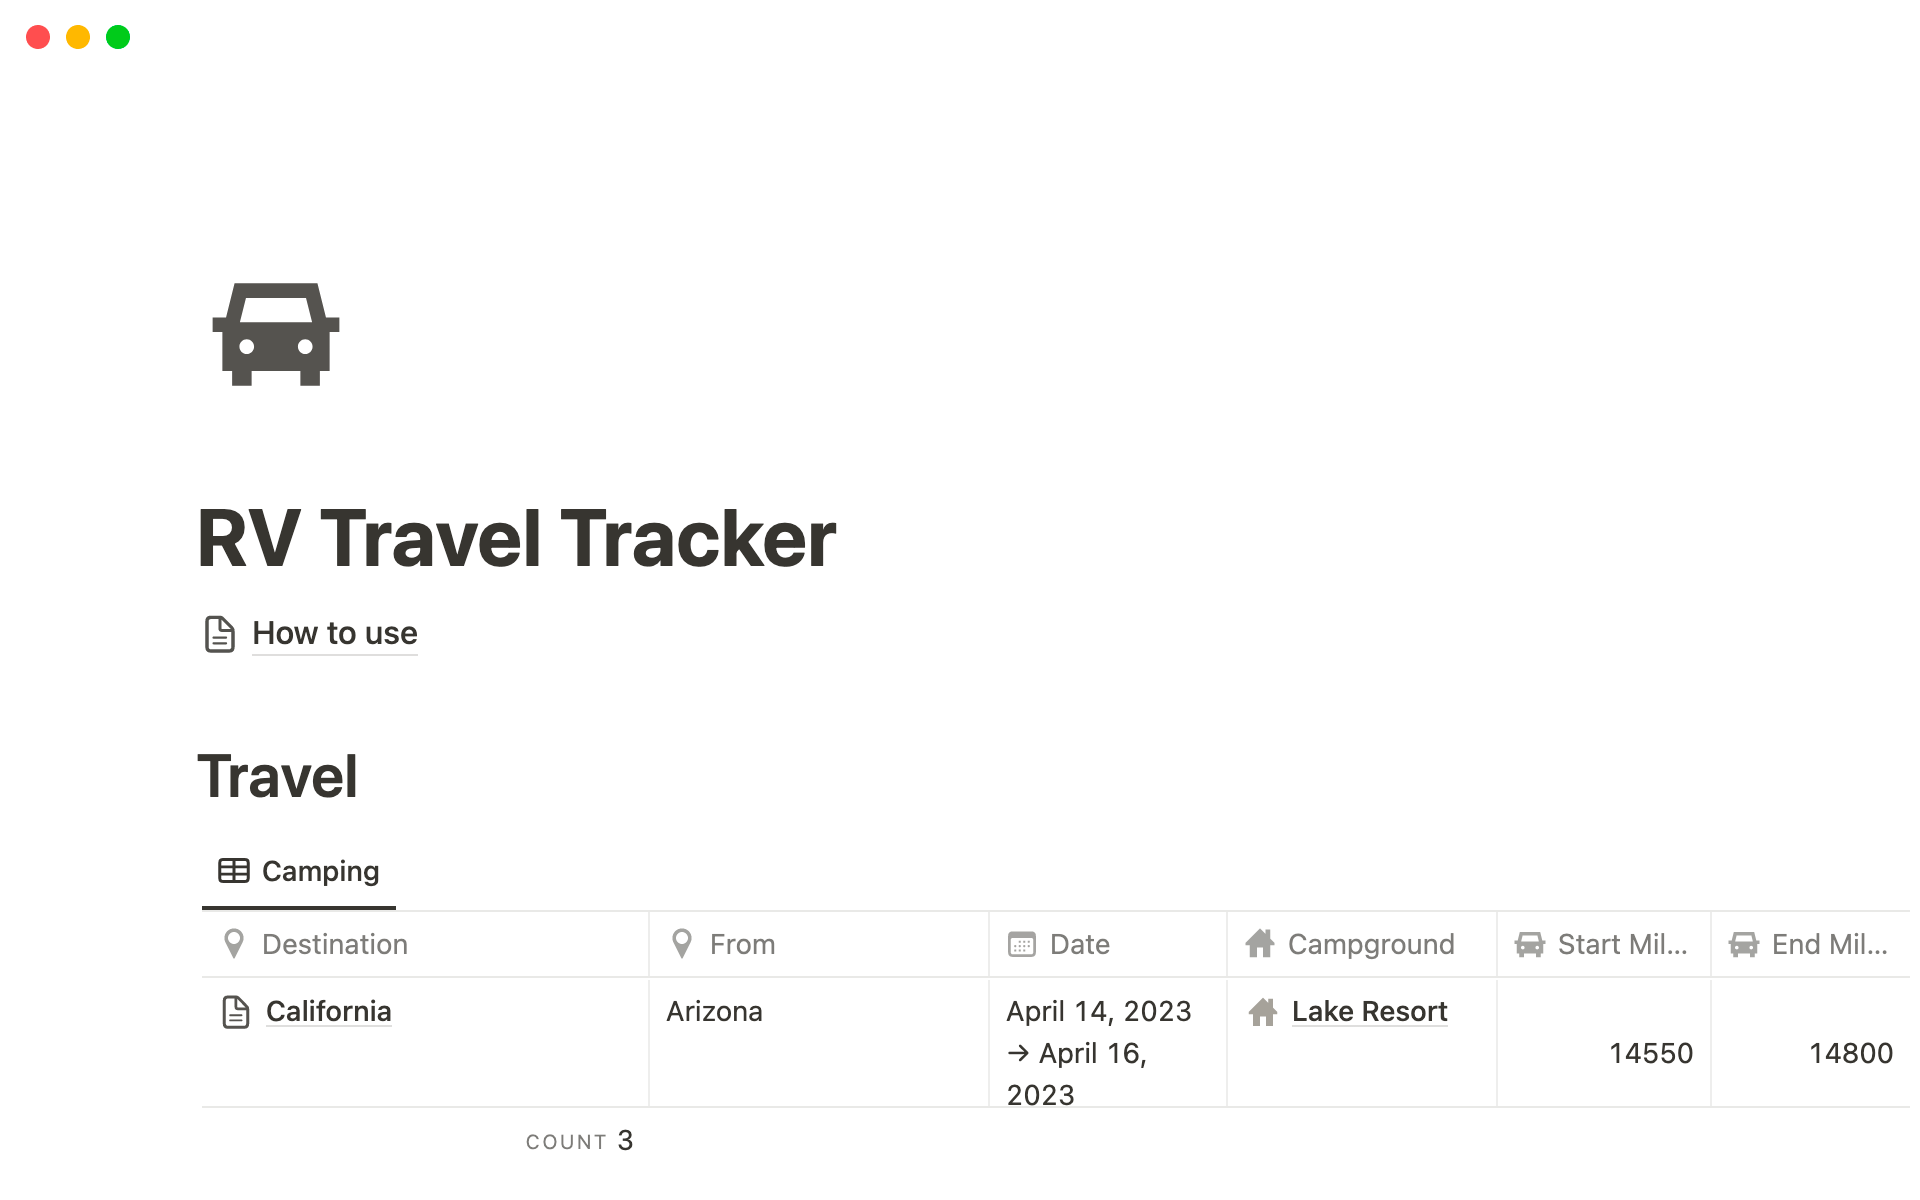 Vista previa de plantilla para RV Travel Tracker